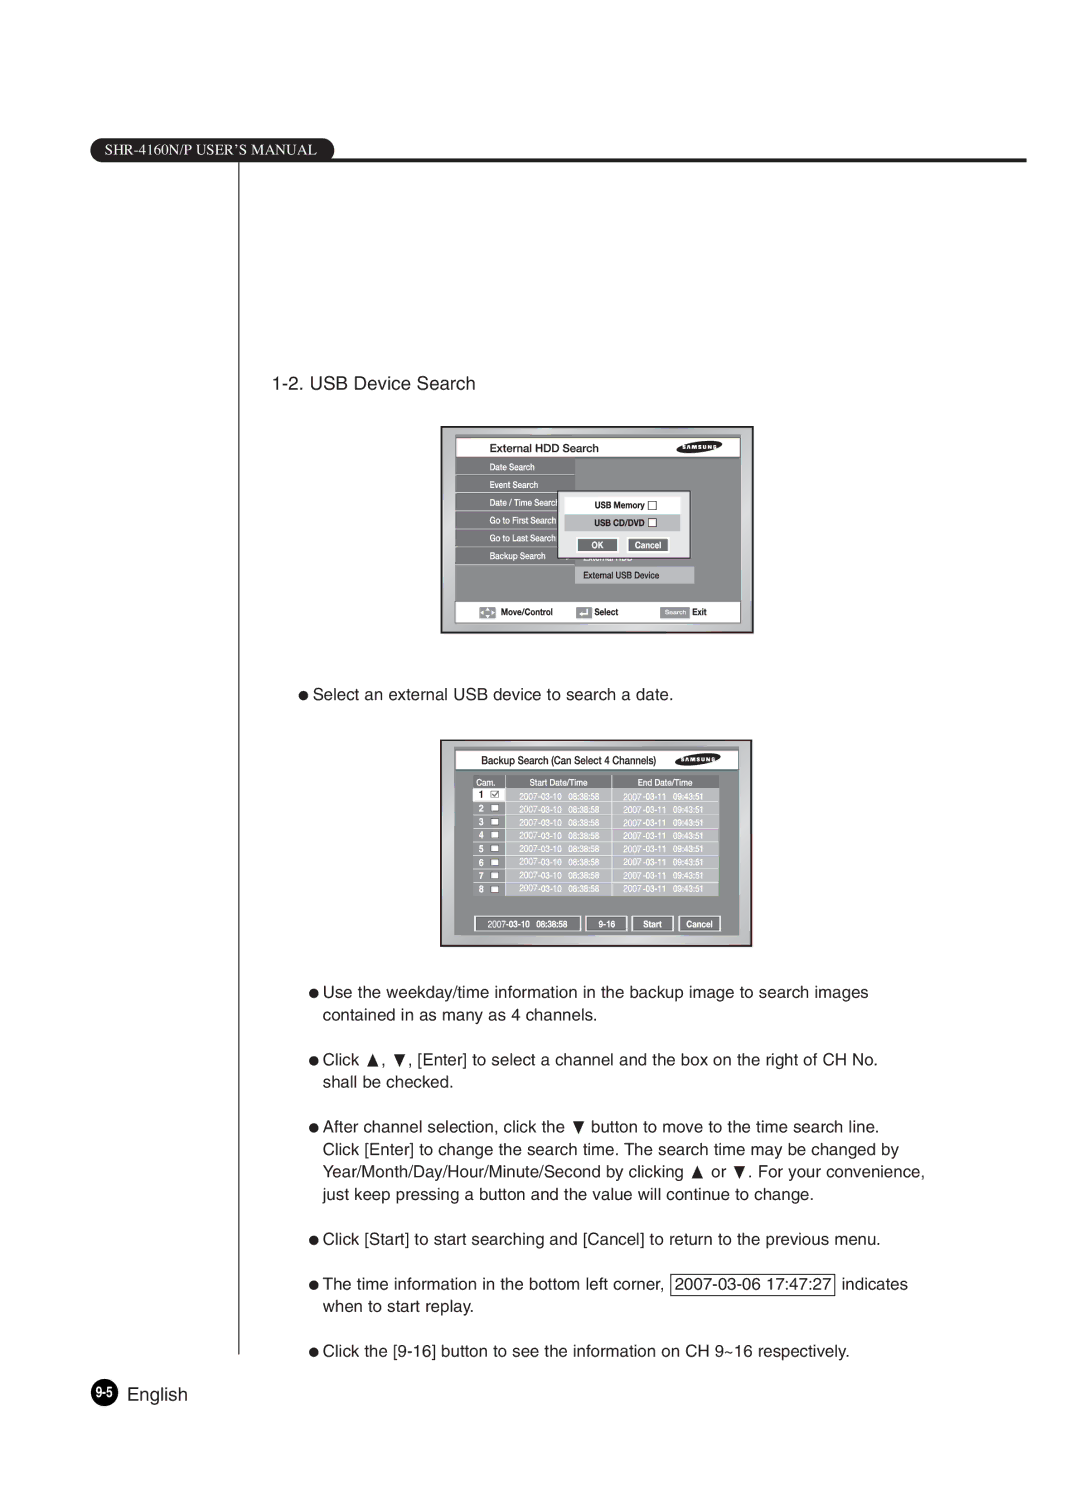 Samsung SHR-4160P manual USB Device Search, 5English 